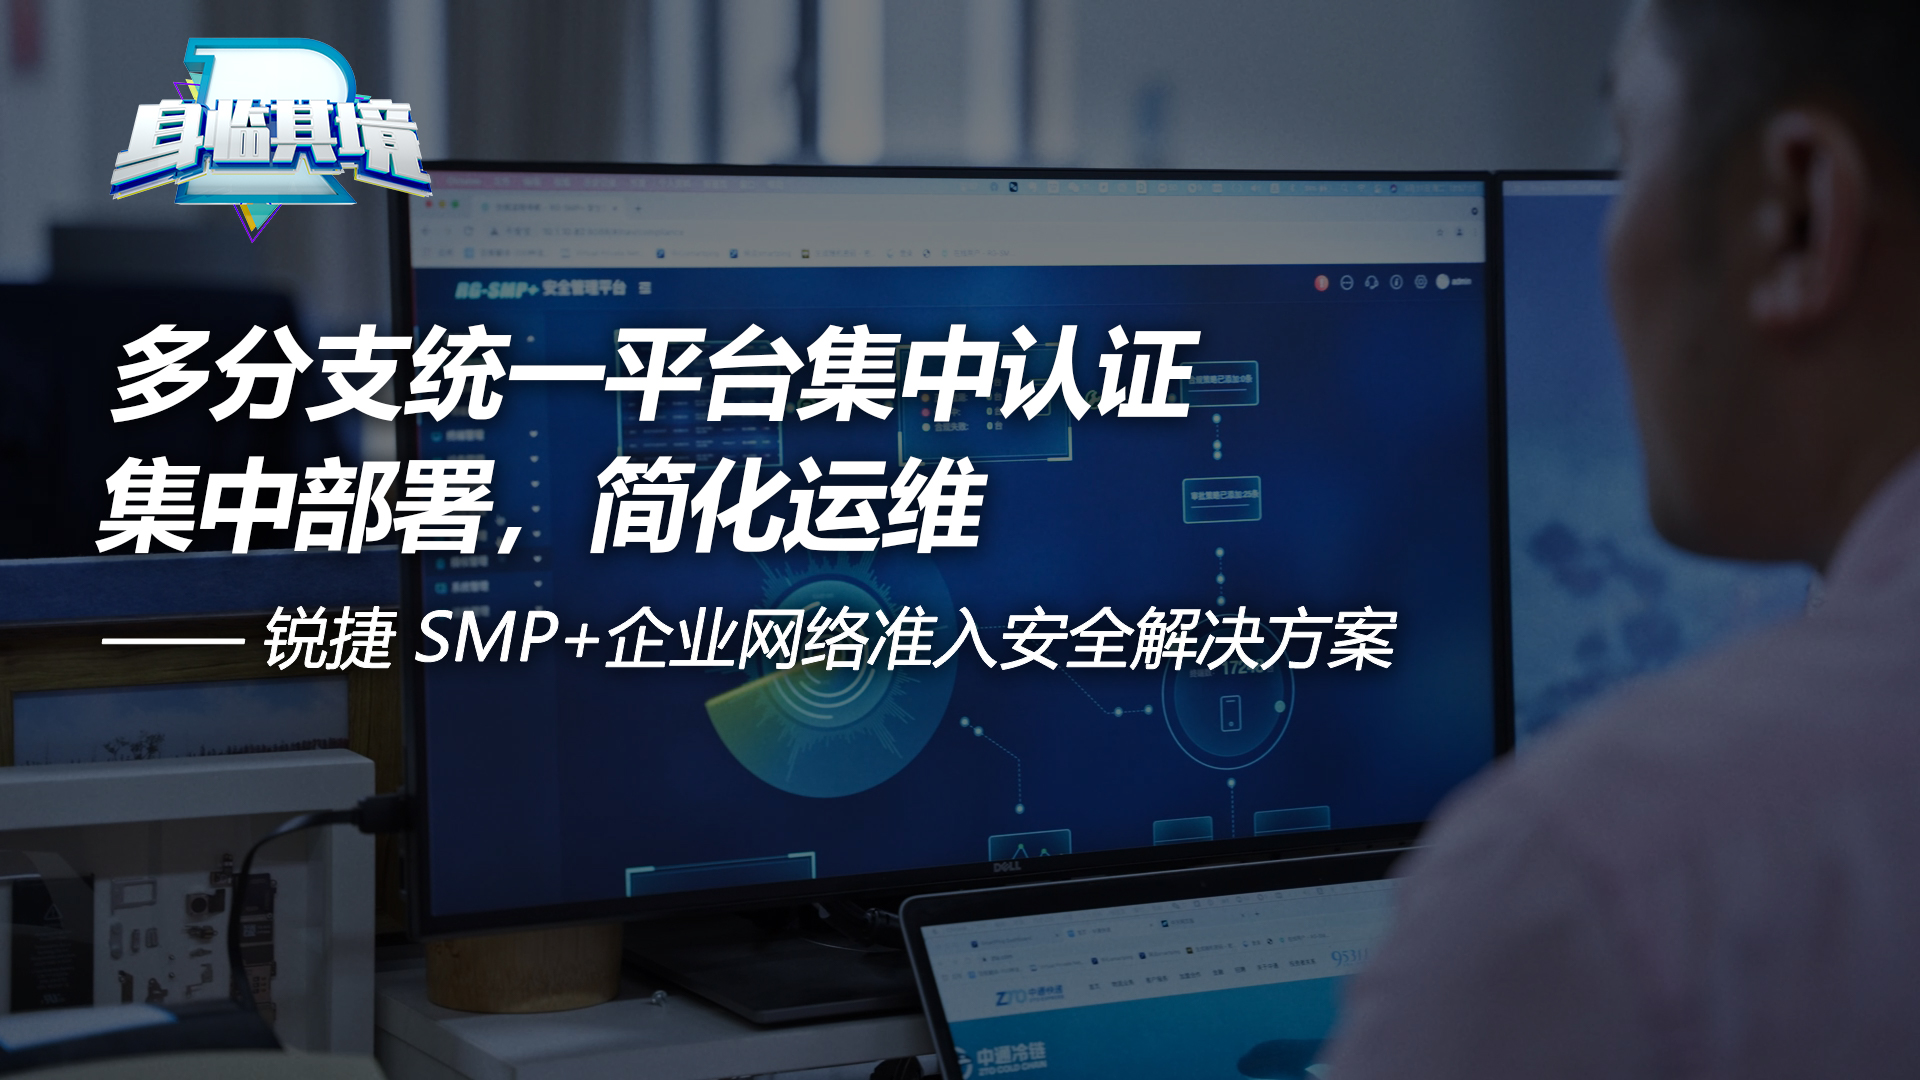 SMP+企业网络准入安全解决方案-多分支统一平台集中认证体验视频